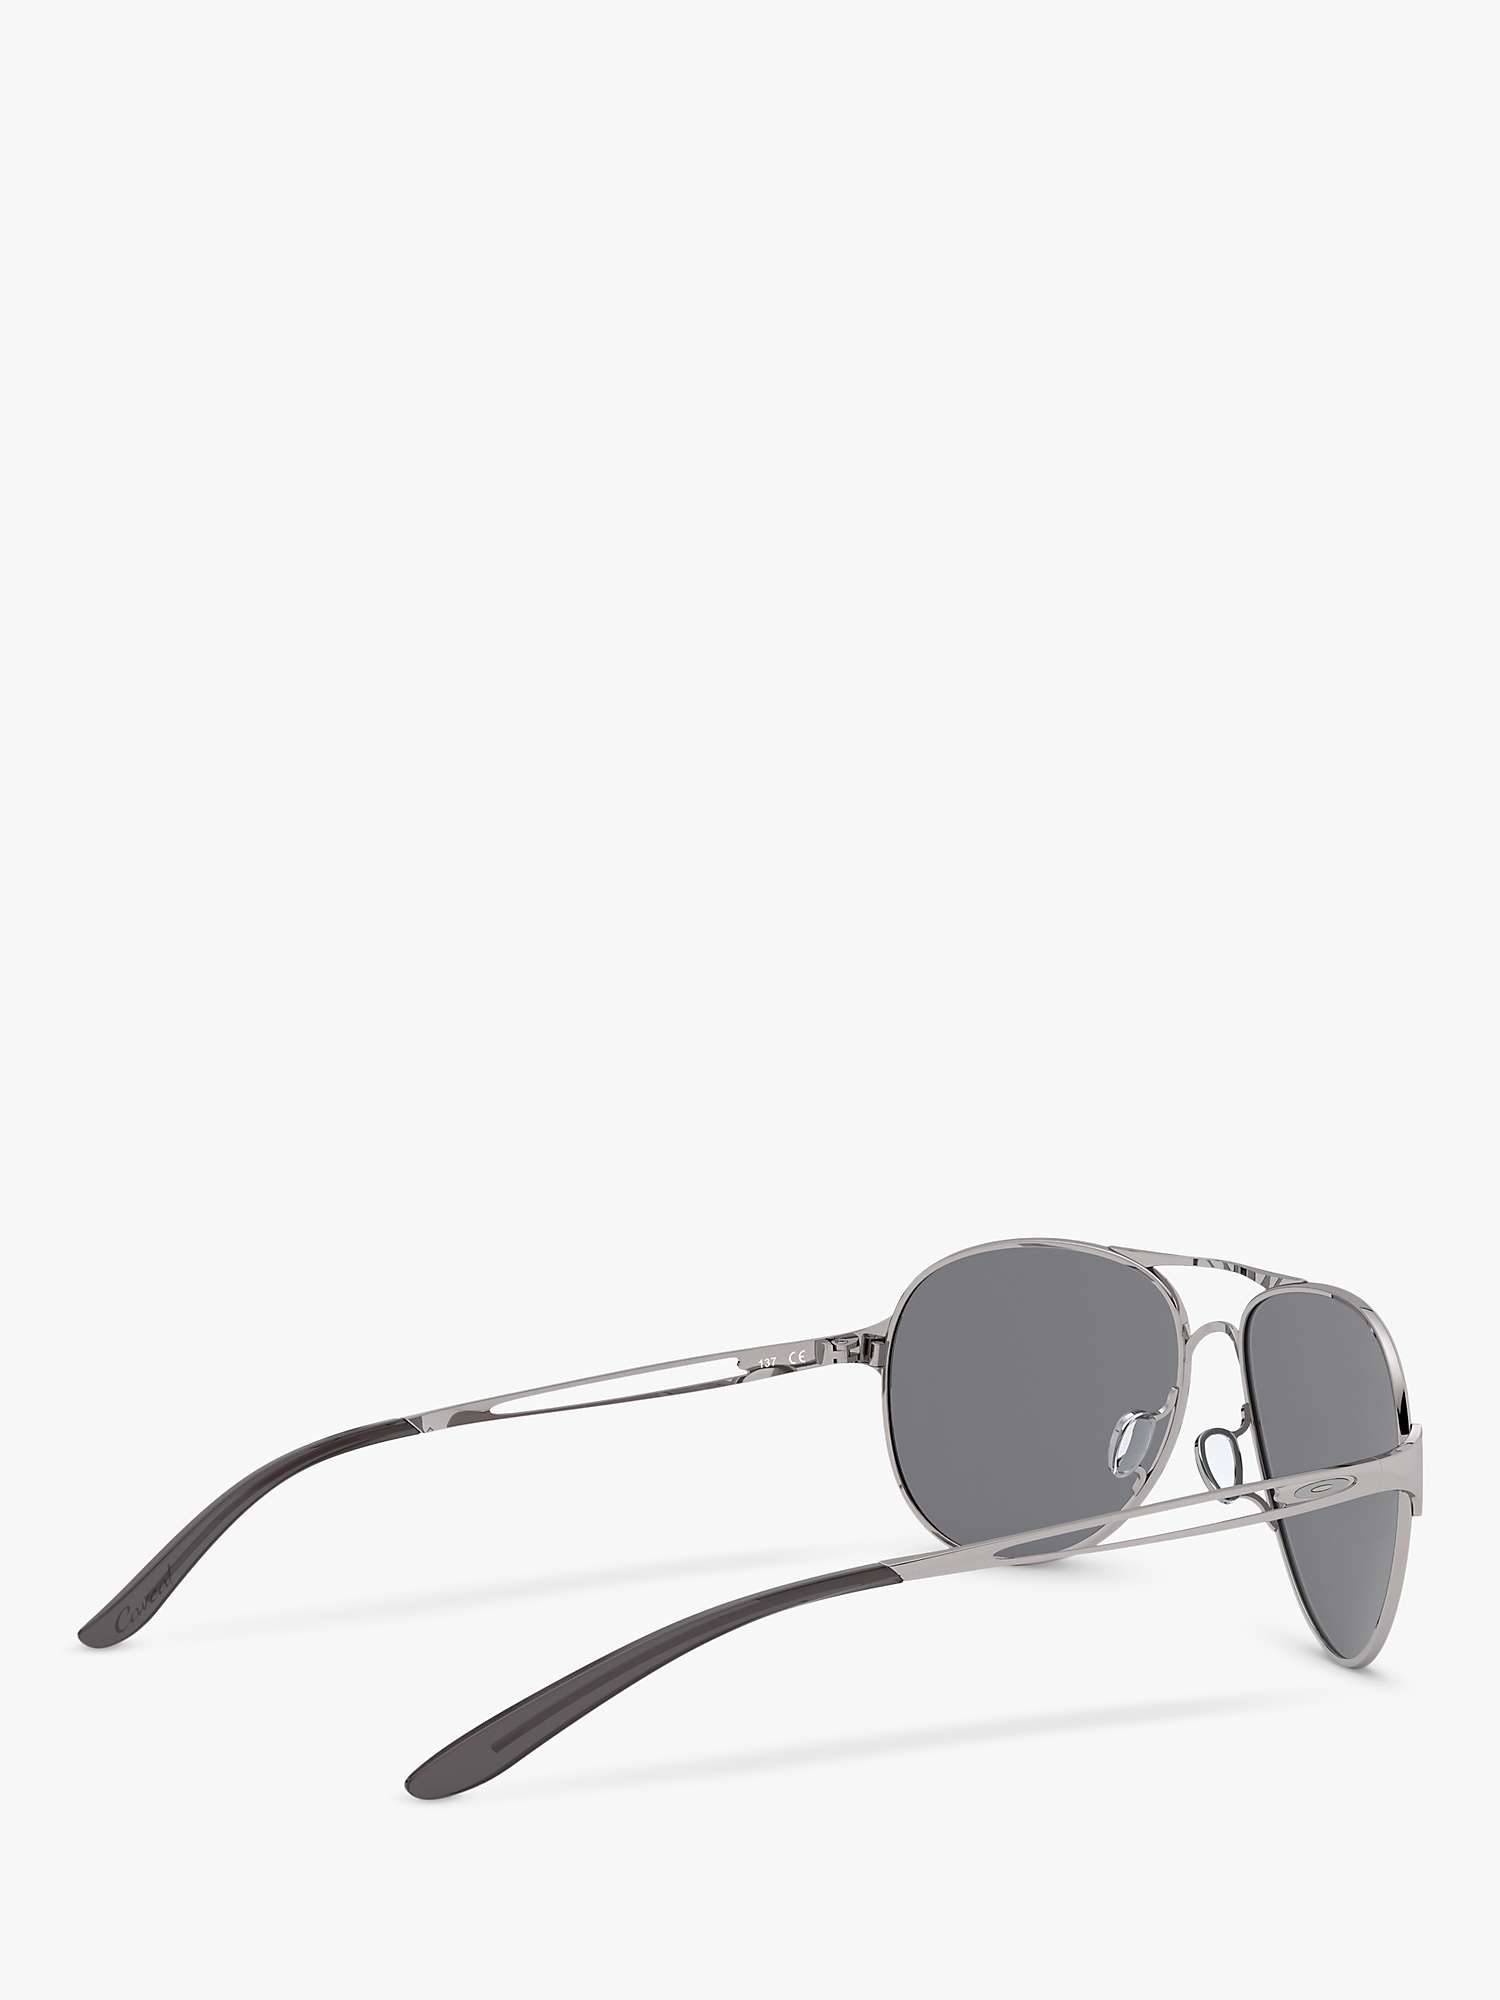 Buy Oakley OO4054 Women's Caveat Pilot Sunglasses, Polished Chrome/Grey Online at johnlewis.com